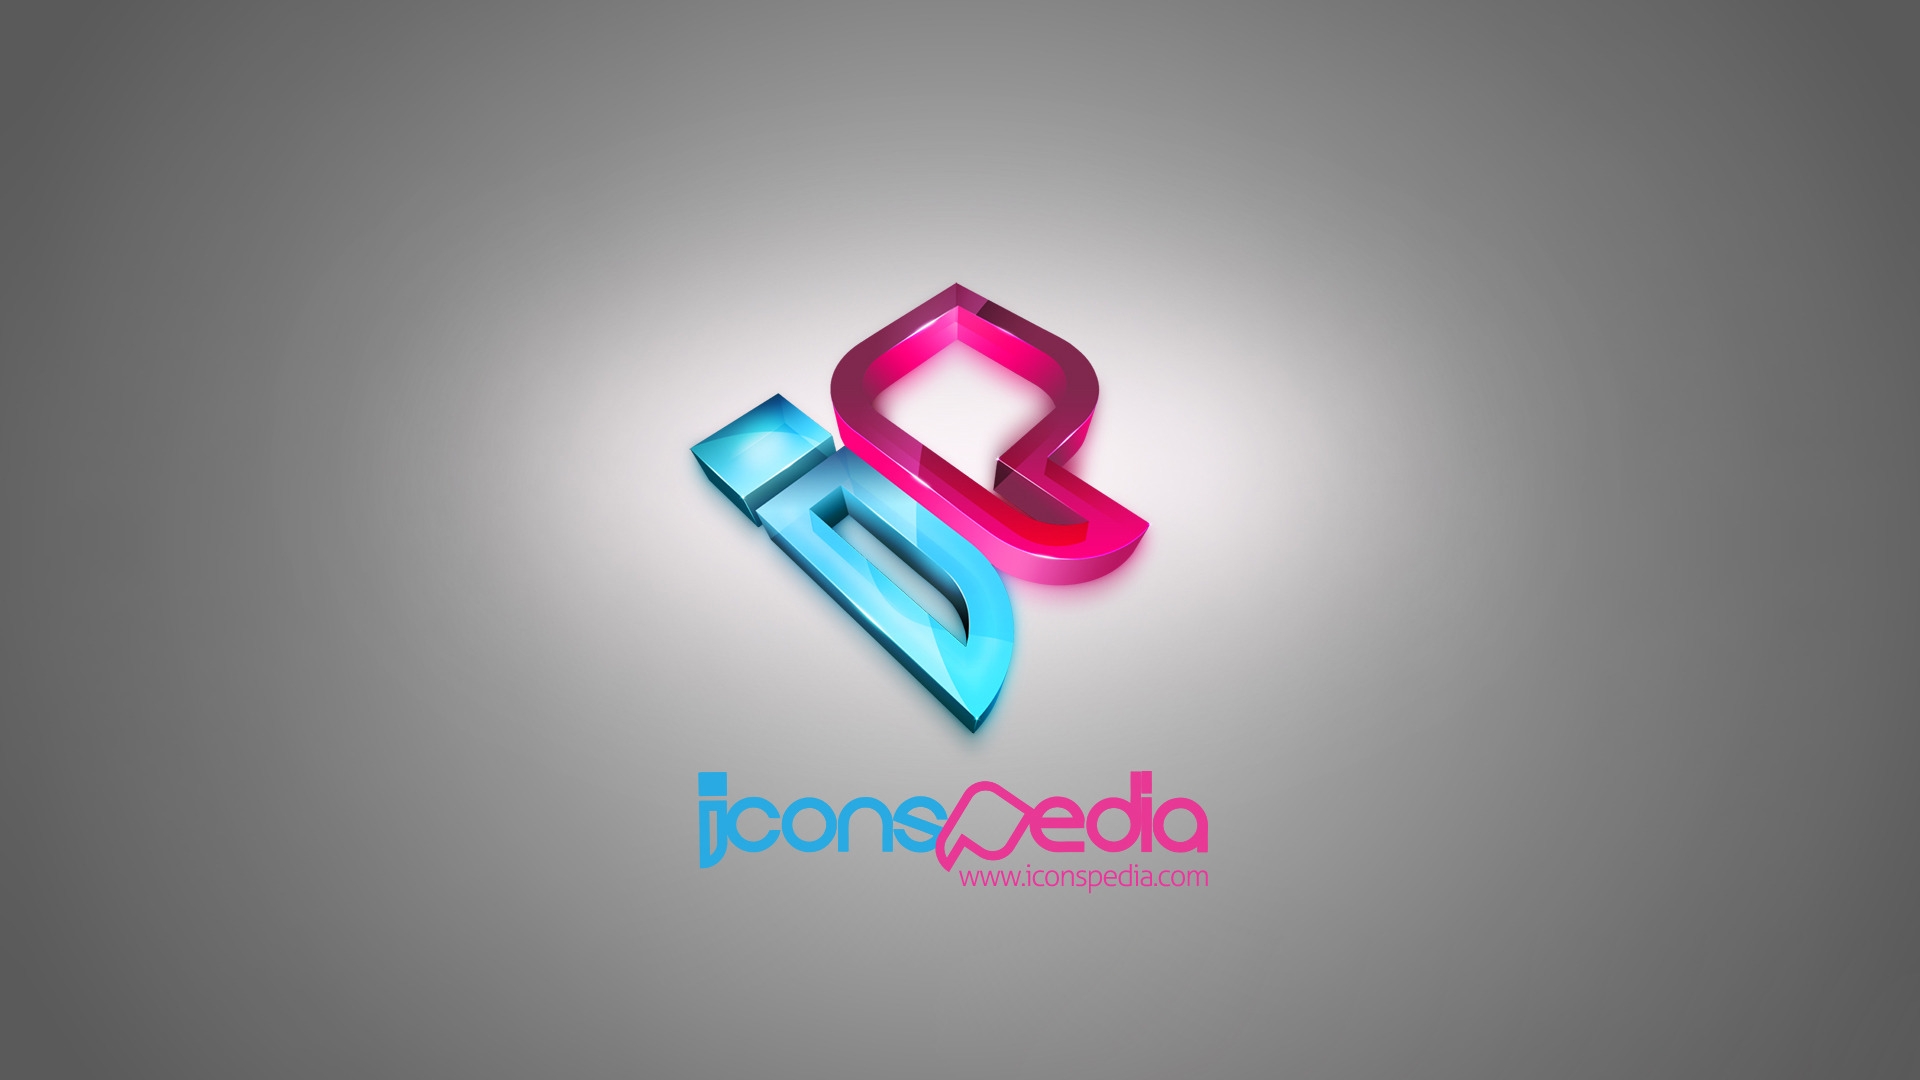 Iconspedia Logo for 1920 x 1080 HDTV 1080p resolution